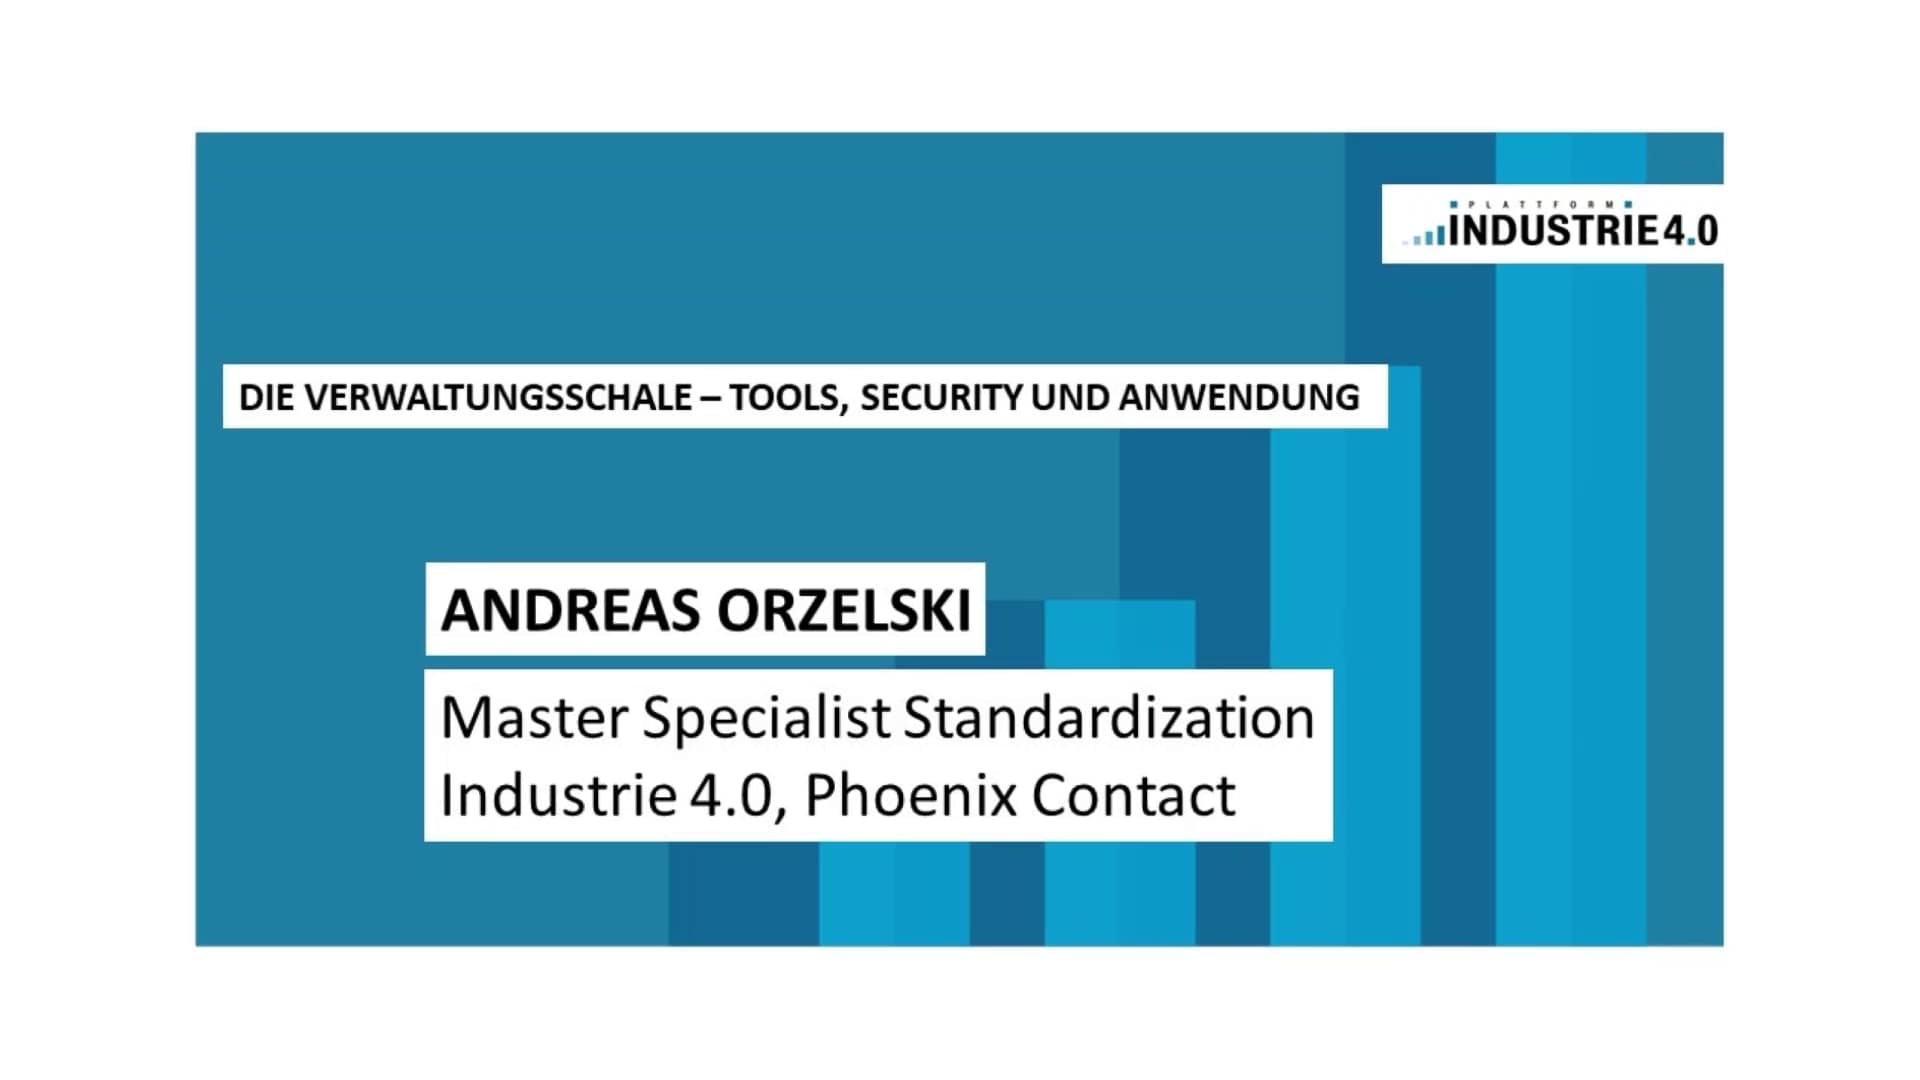 Andreas Orzelski, Master Specialist Standardization Industrie 4.0, Phoenix Contact​